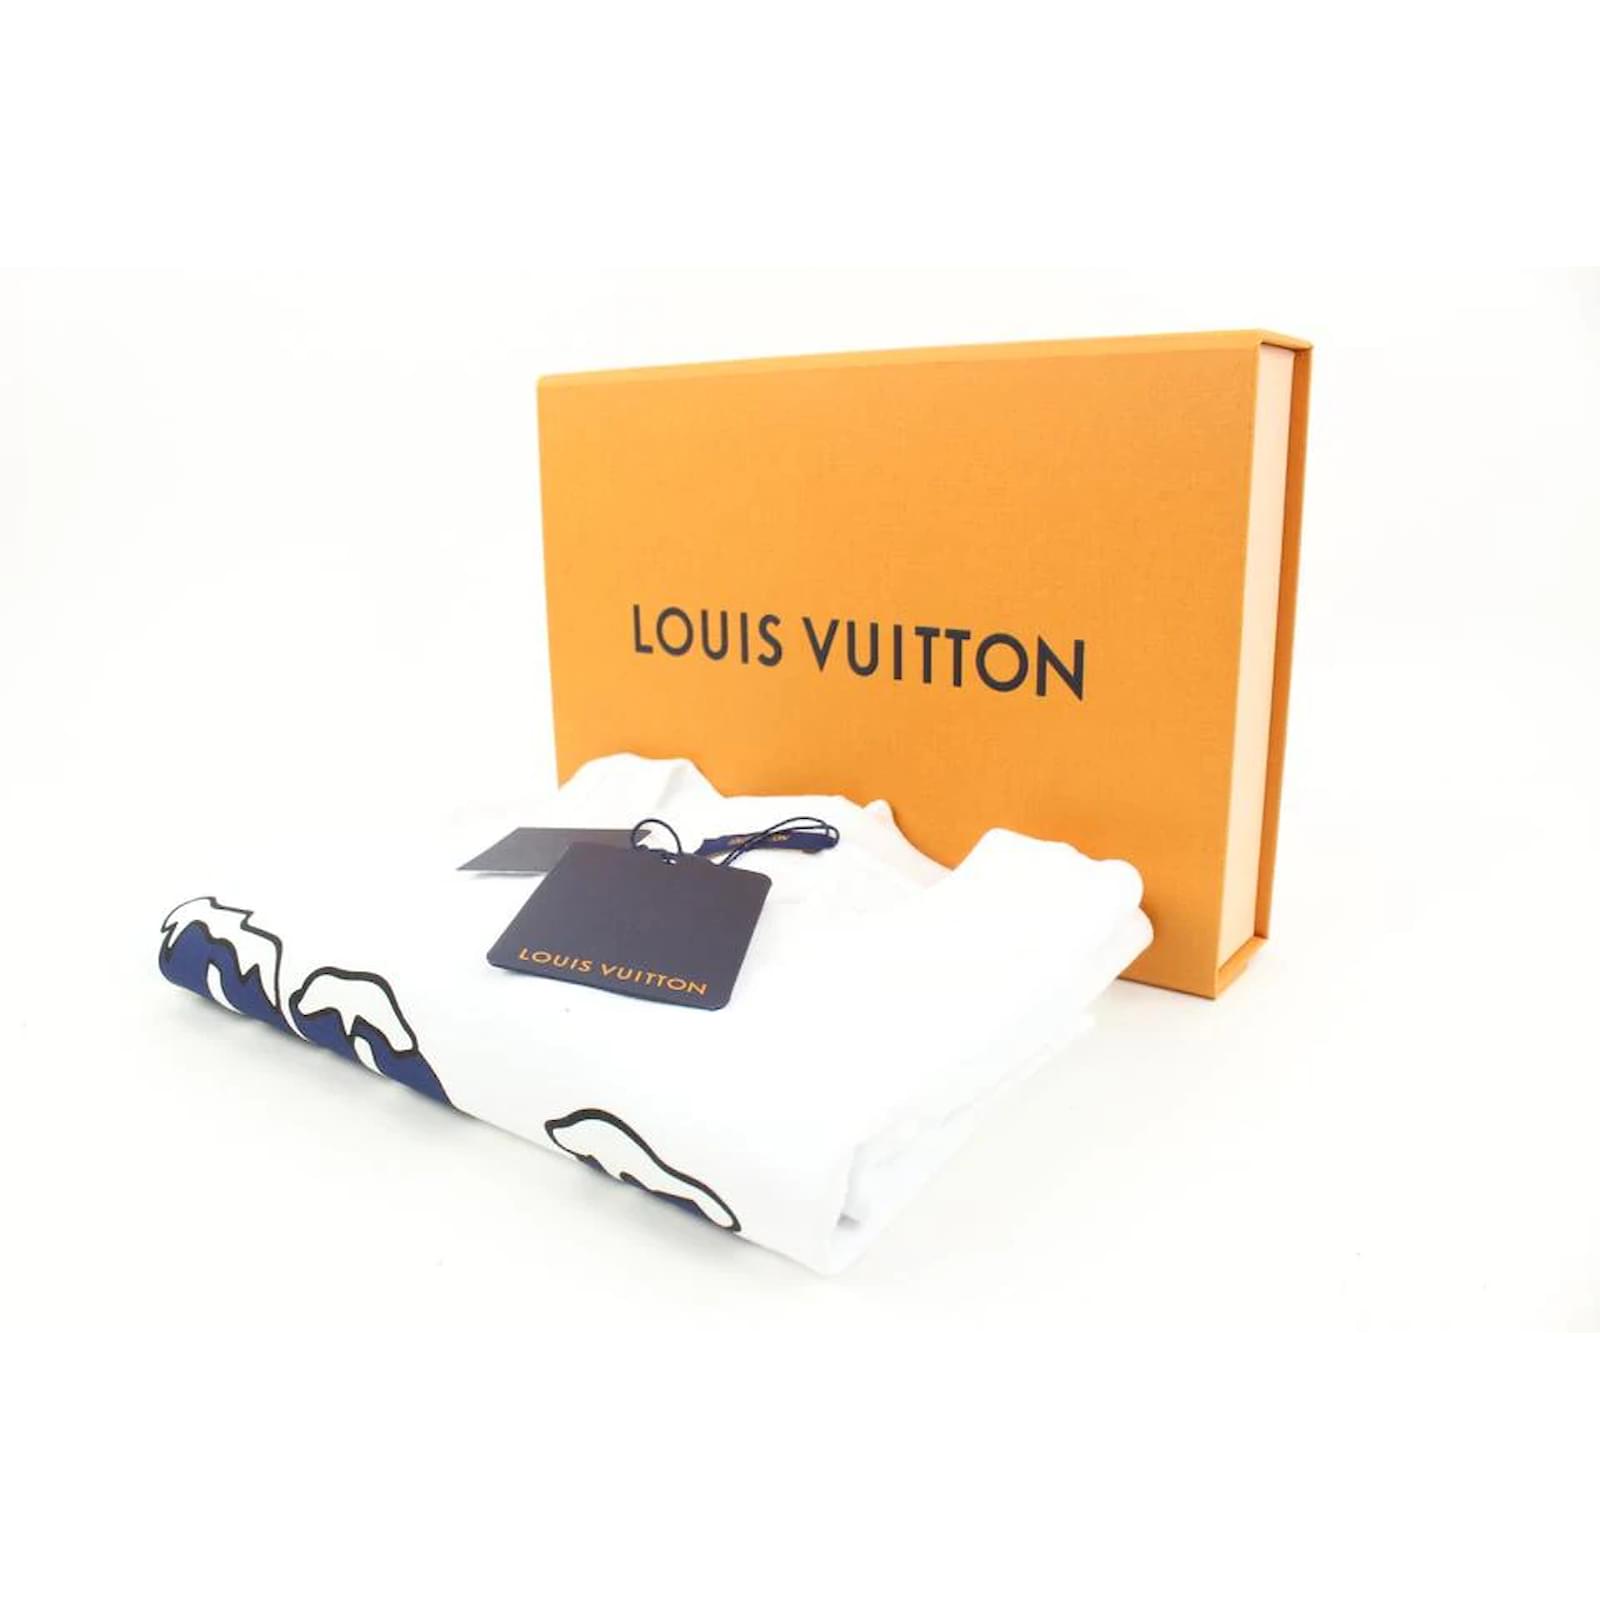 LOUIS VUITTON LV DO A KICKFLIP T-SHIRT / TEE (2 COLOR), Luxury